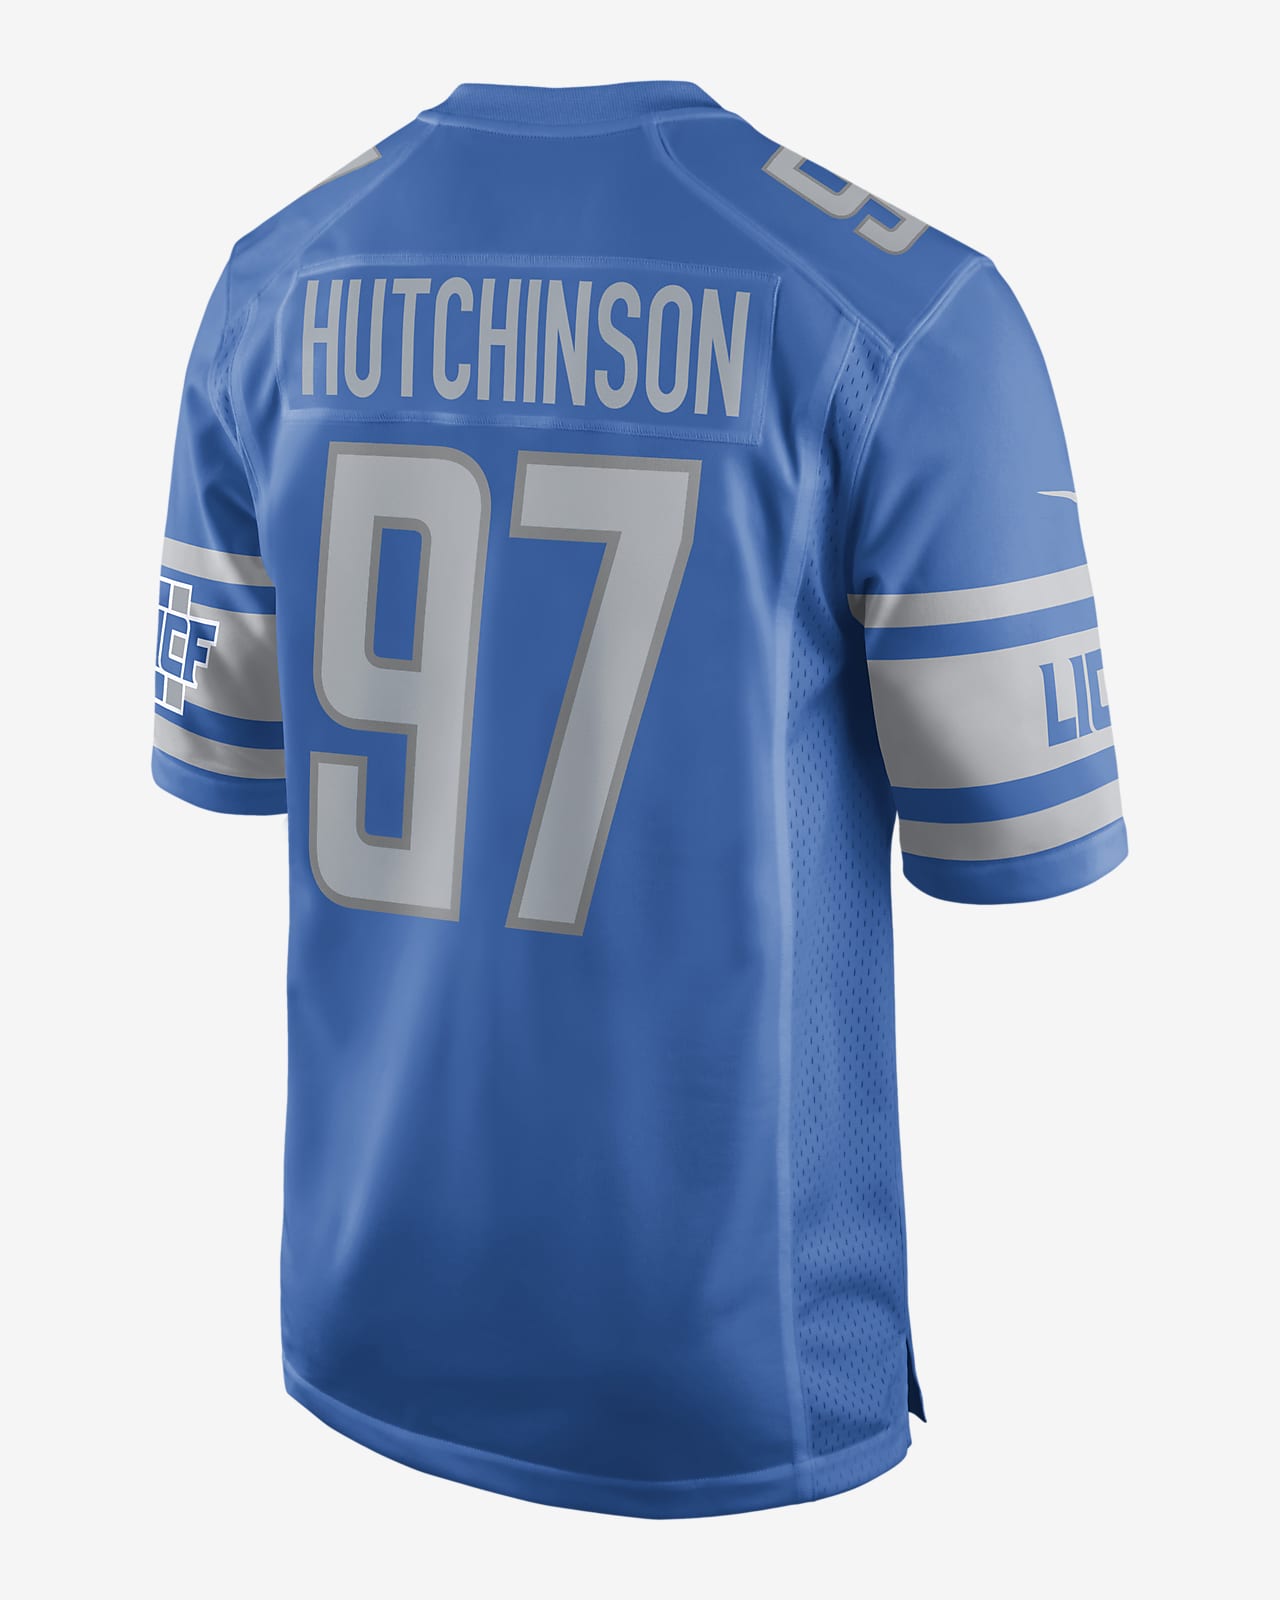 hutchinson jersey